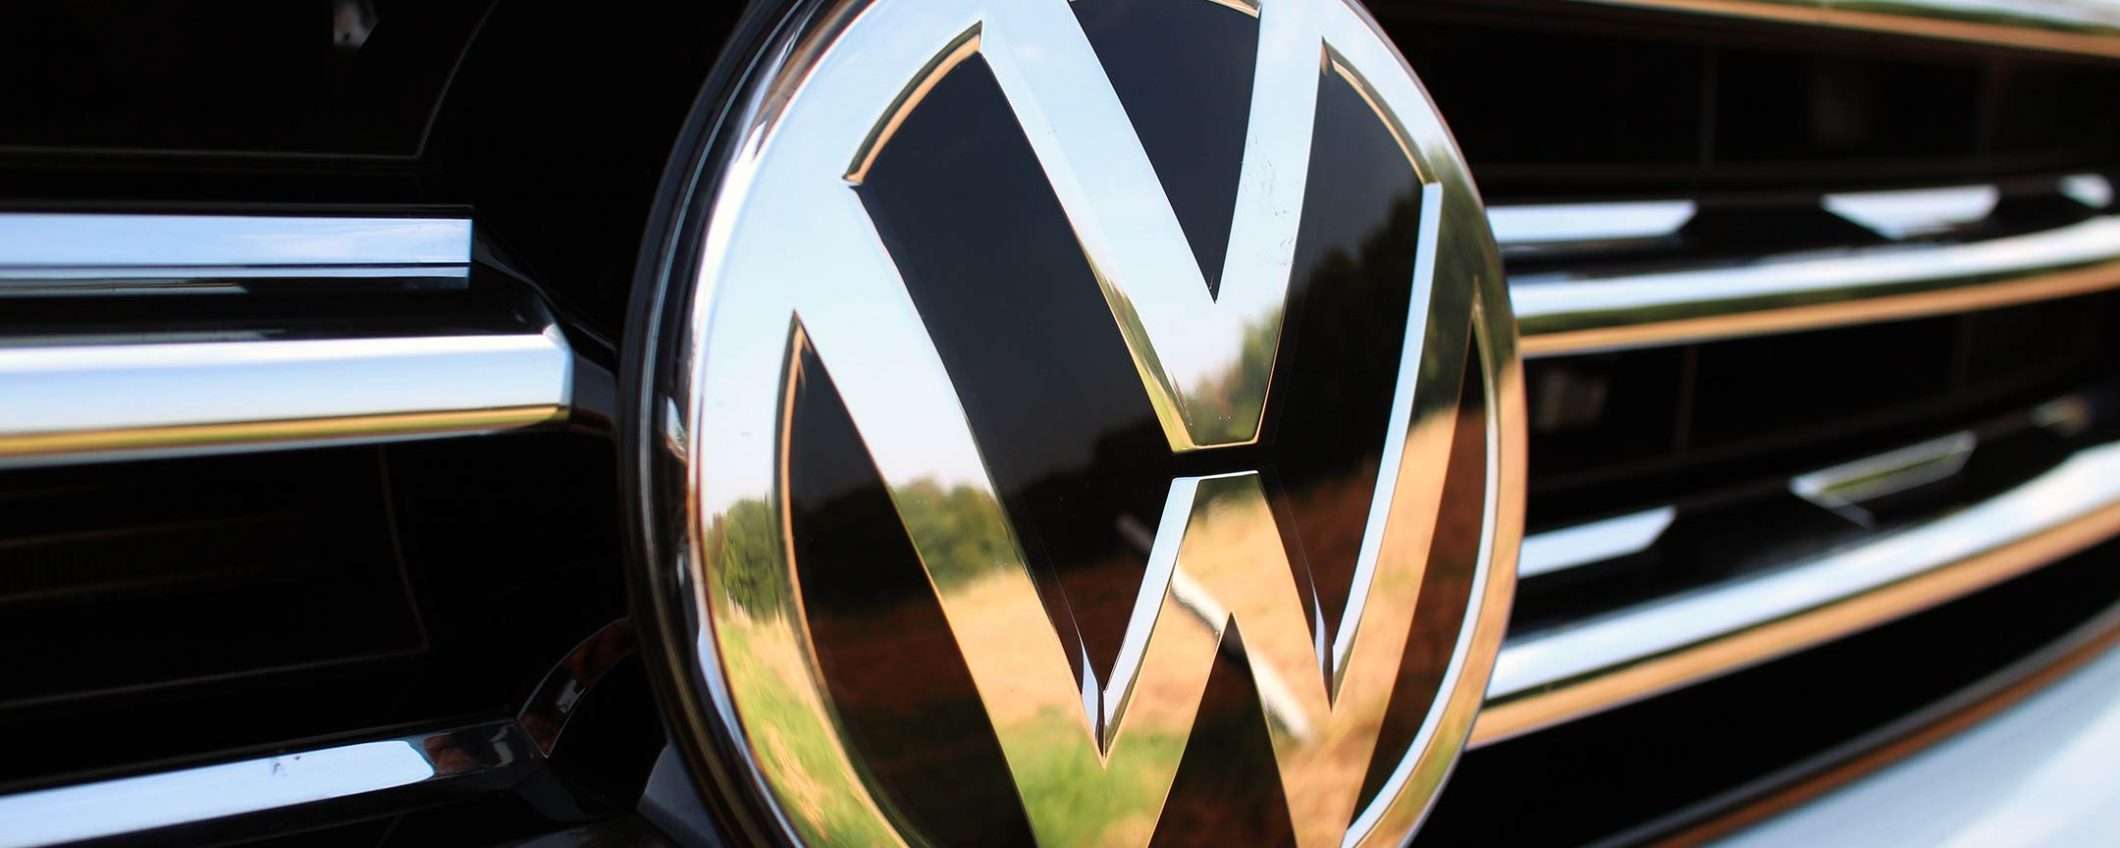 VW pensa al quantum computing per il traffico